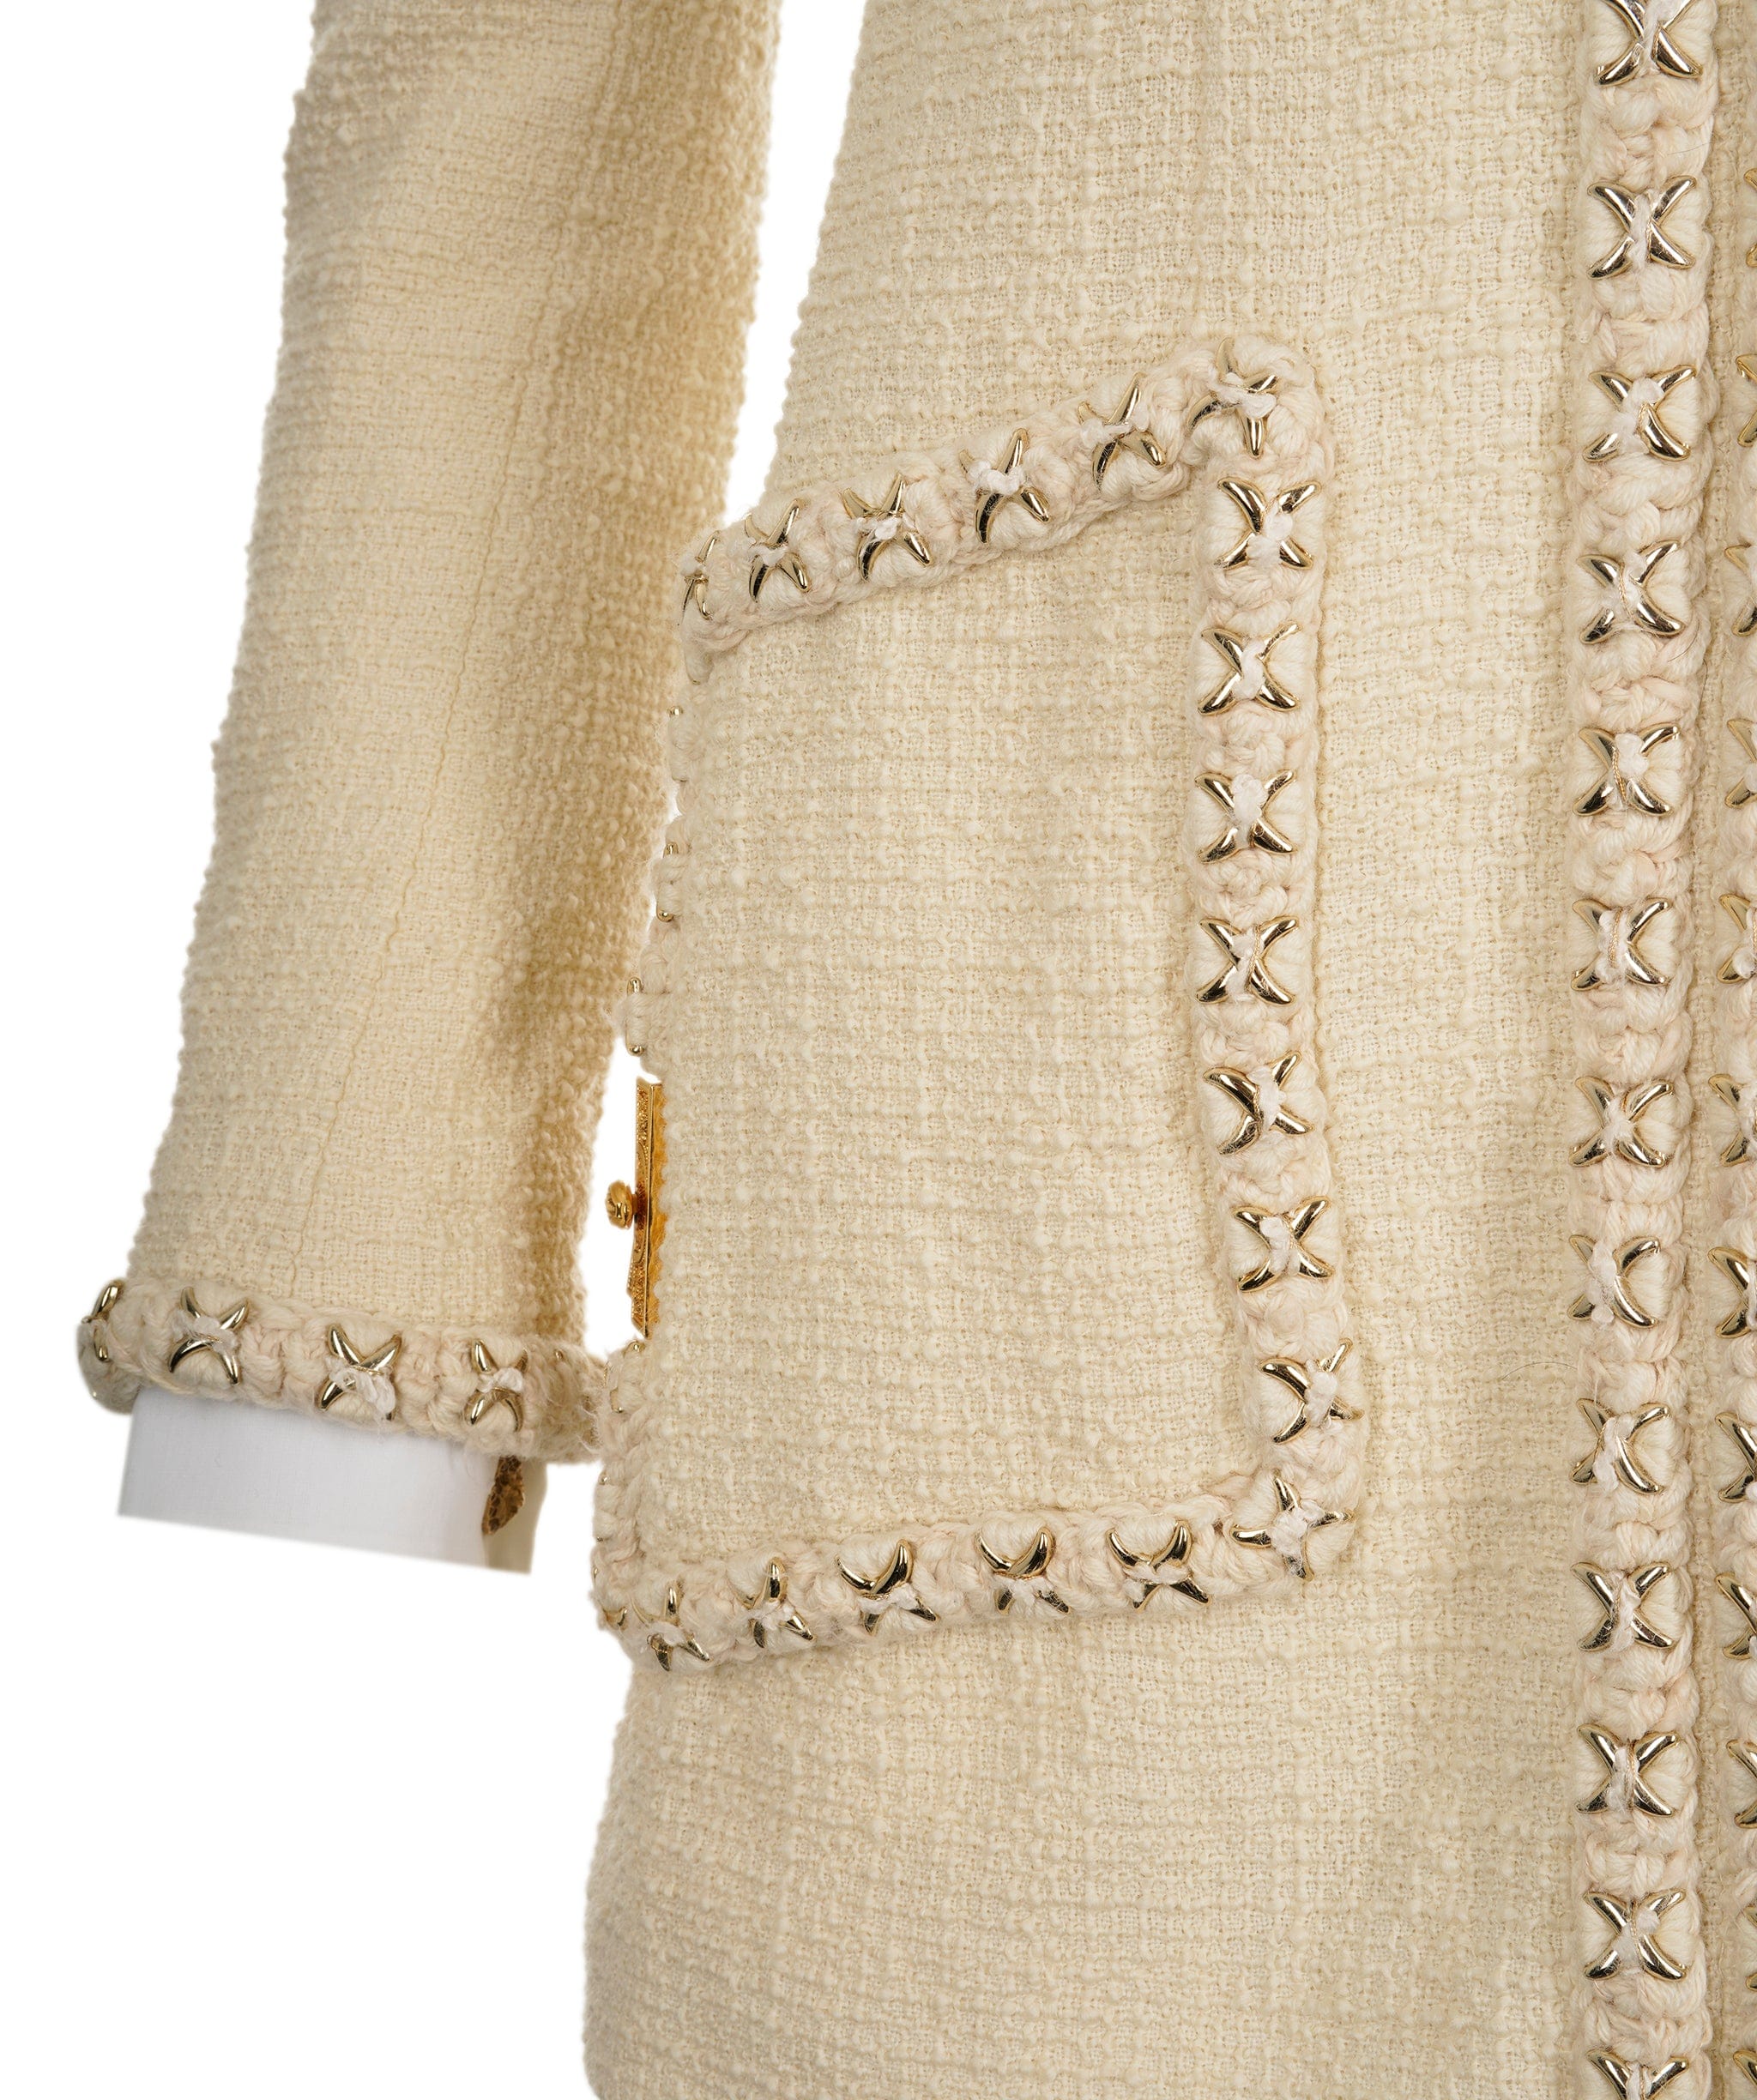 Chanel Chanel jacket tweed cream Ritz Metiers d'art collection FR36 AVC1447